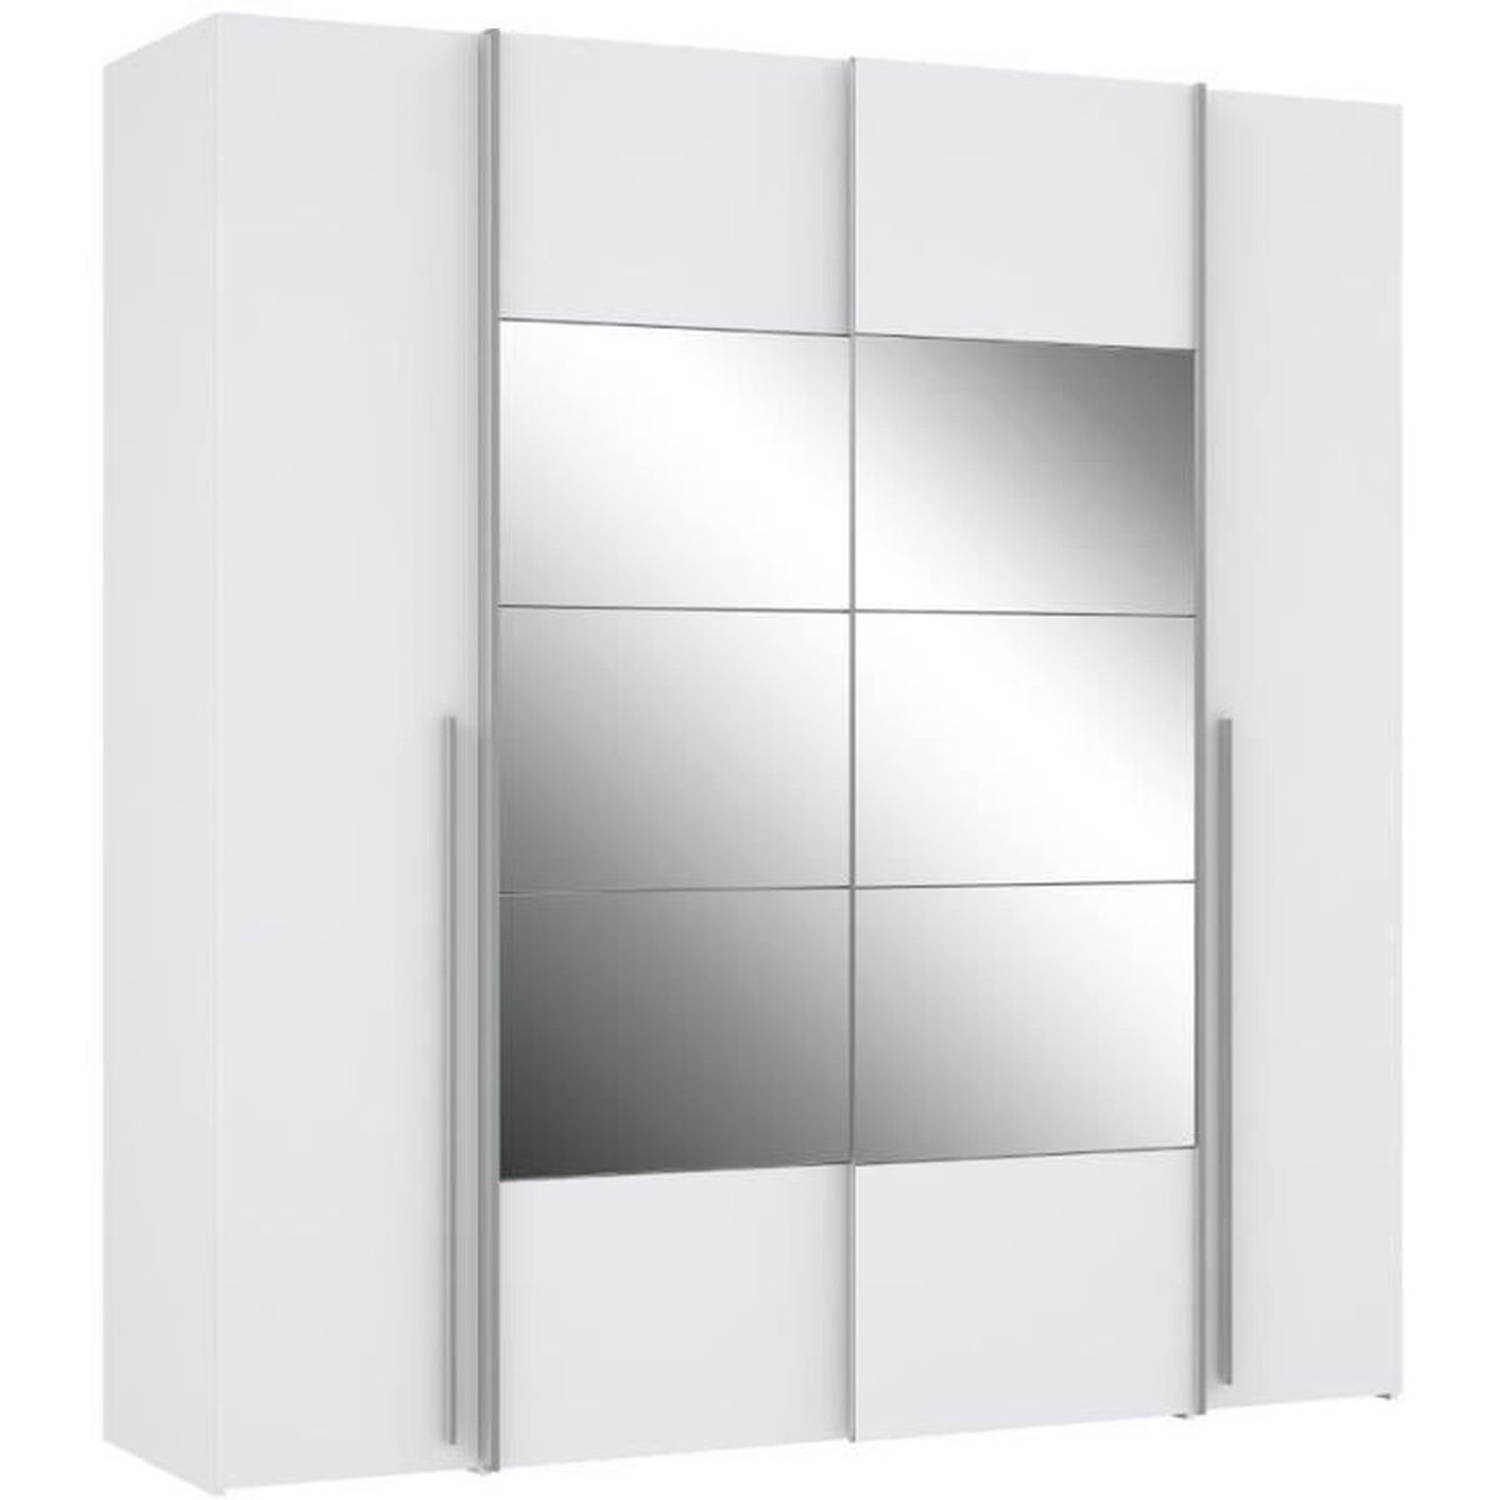 NARAGO kledingkast - Mat wit decor - 2 schuifdeuren + spiegel + 2 draaideuren + 2 kledingkasten - L200 x D61 x H210 cm